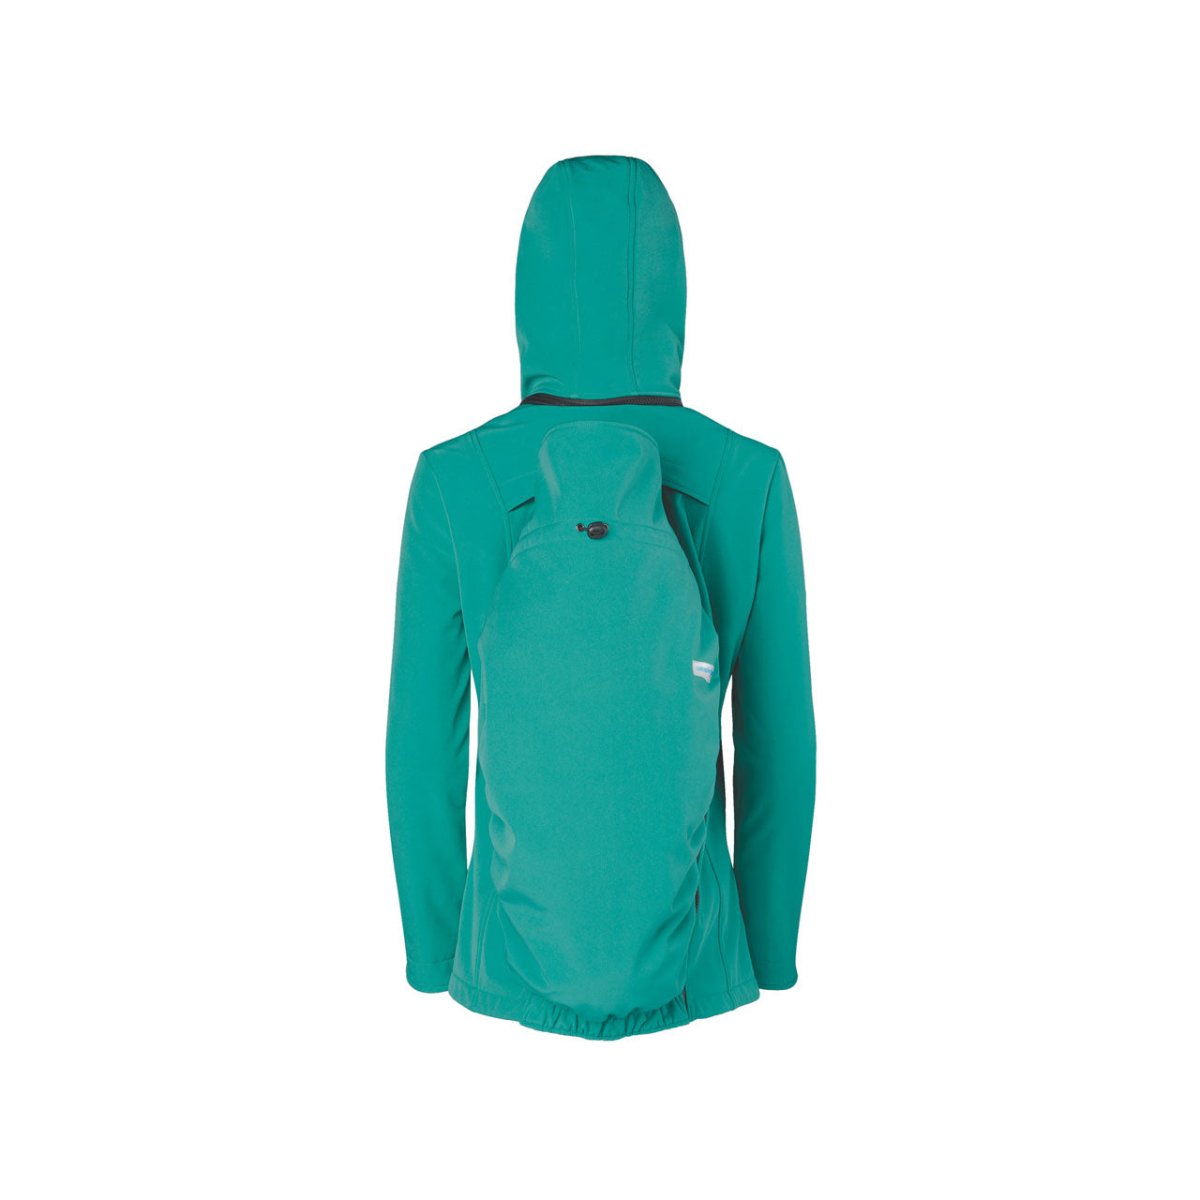 Wanderling Confluence Babywearing Jacket - 5 colors - Babywearing OuterwearLittle Zen One